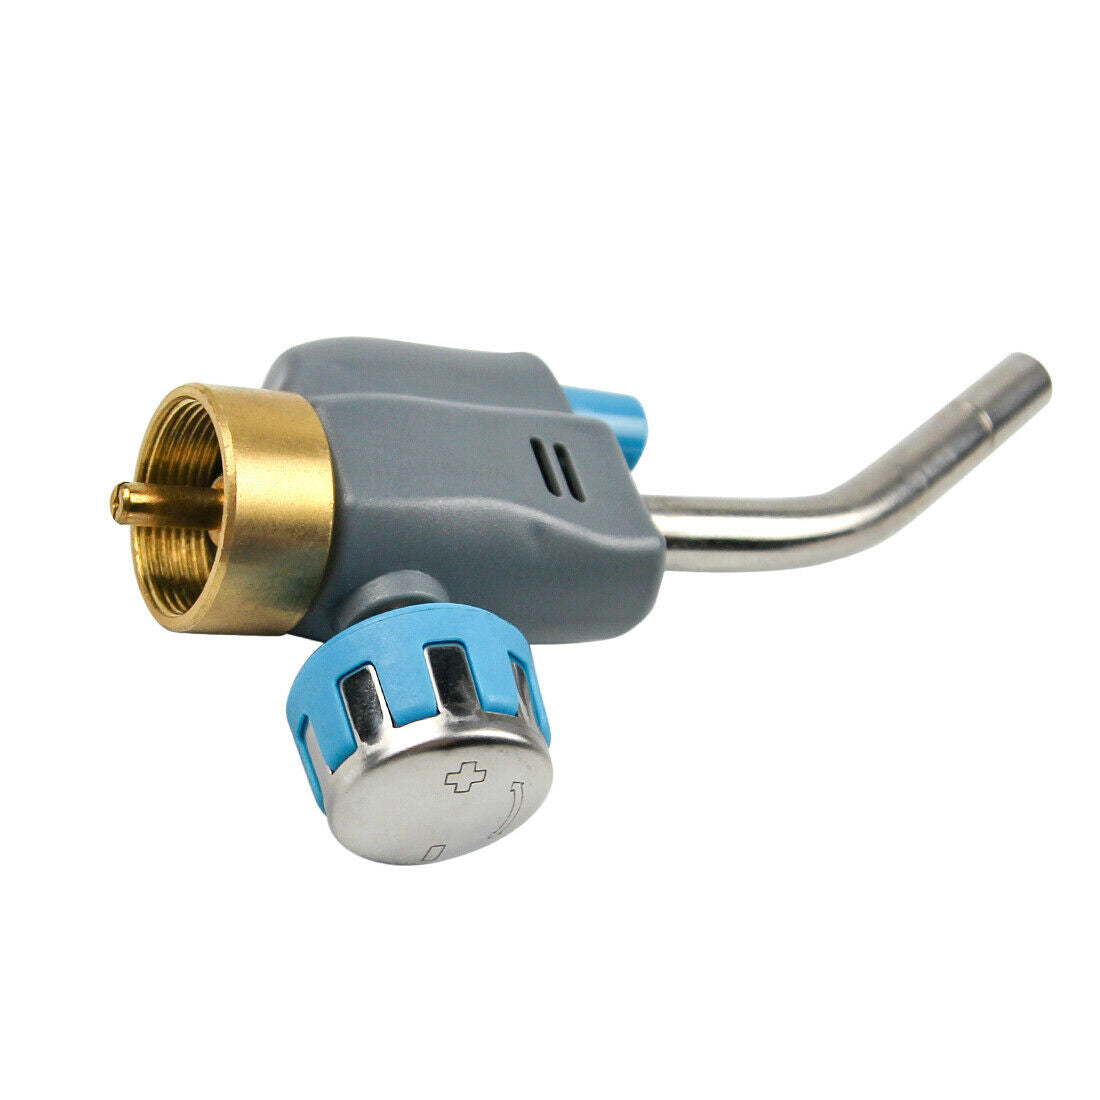 MRS-7015 Trigger Start Gas Welding Torch Nozzle Head